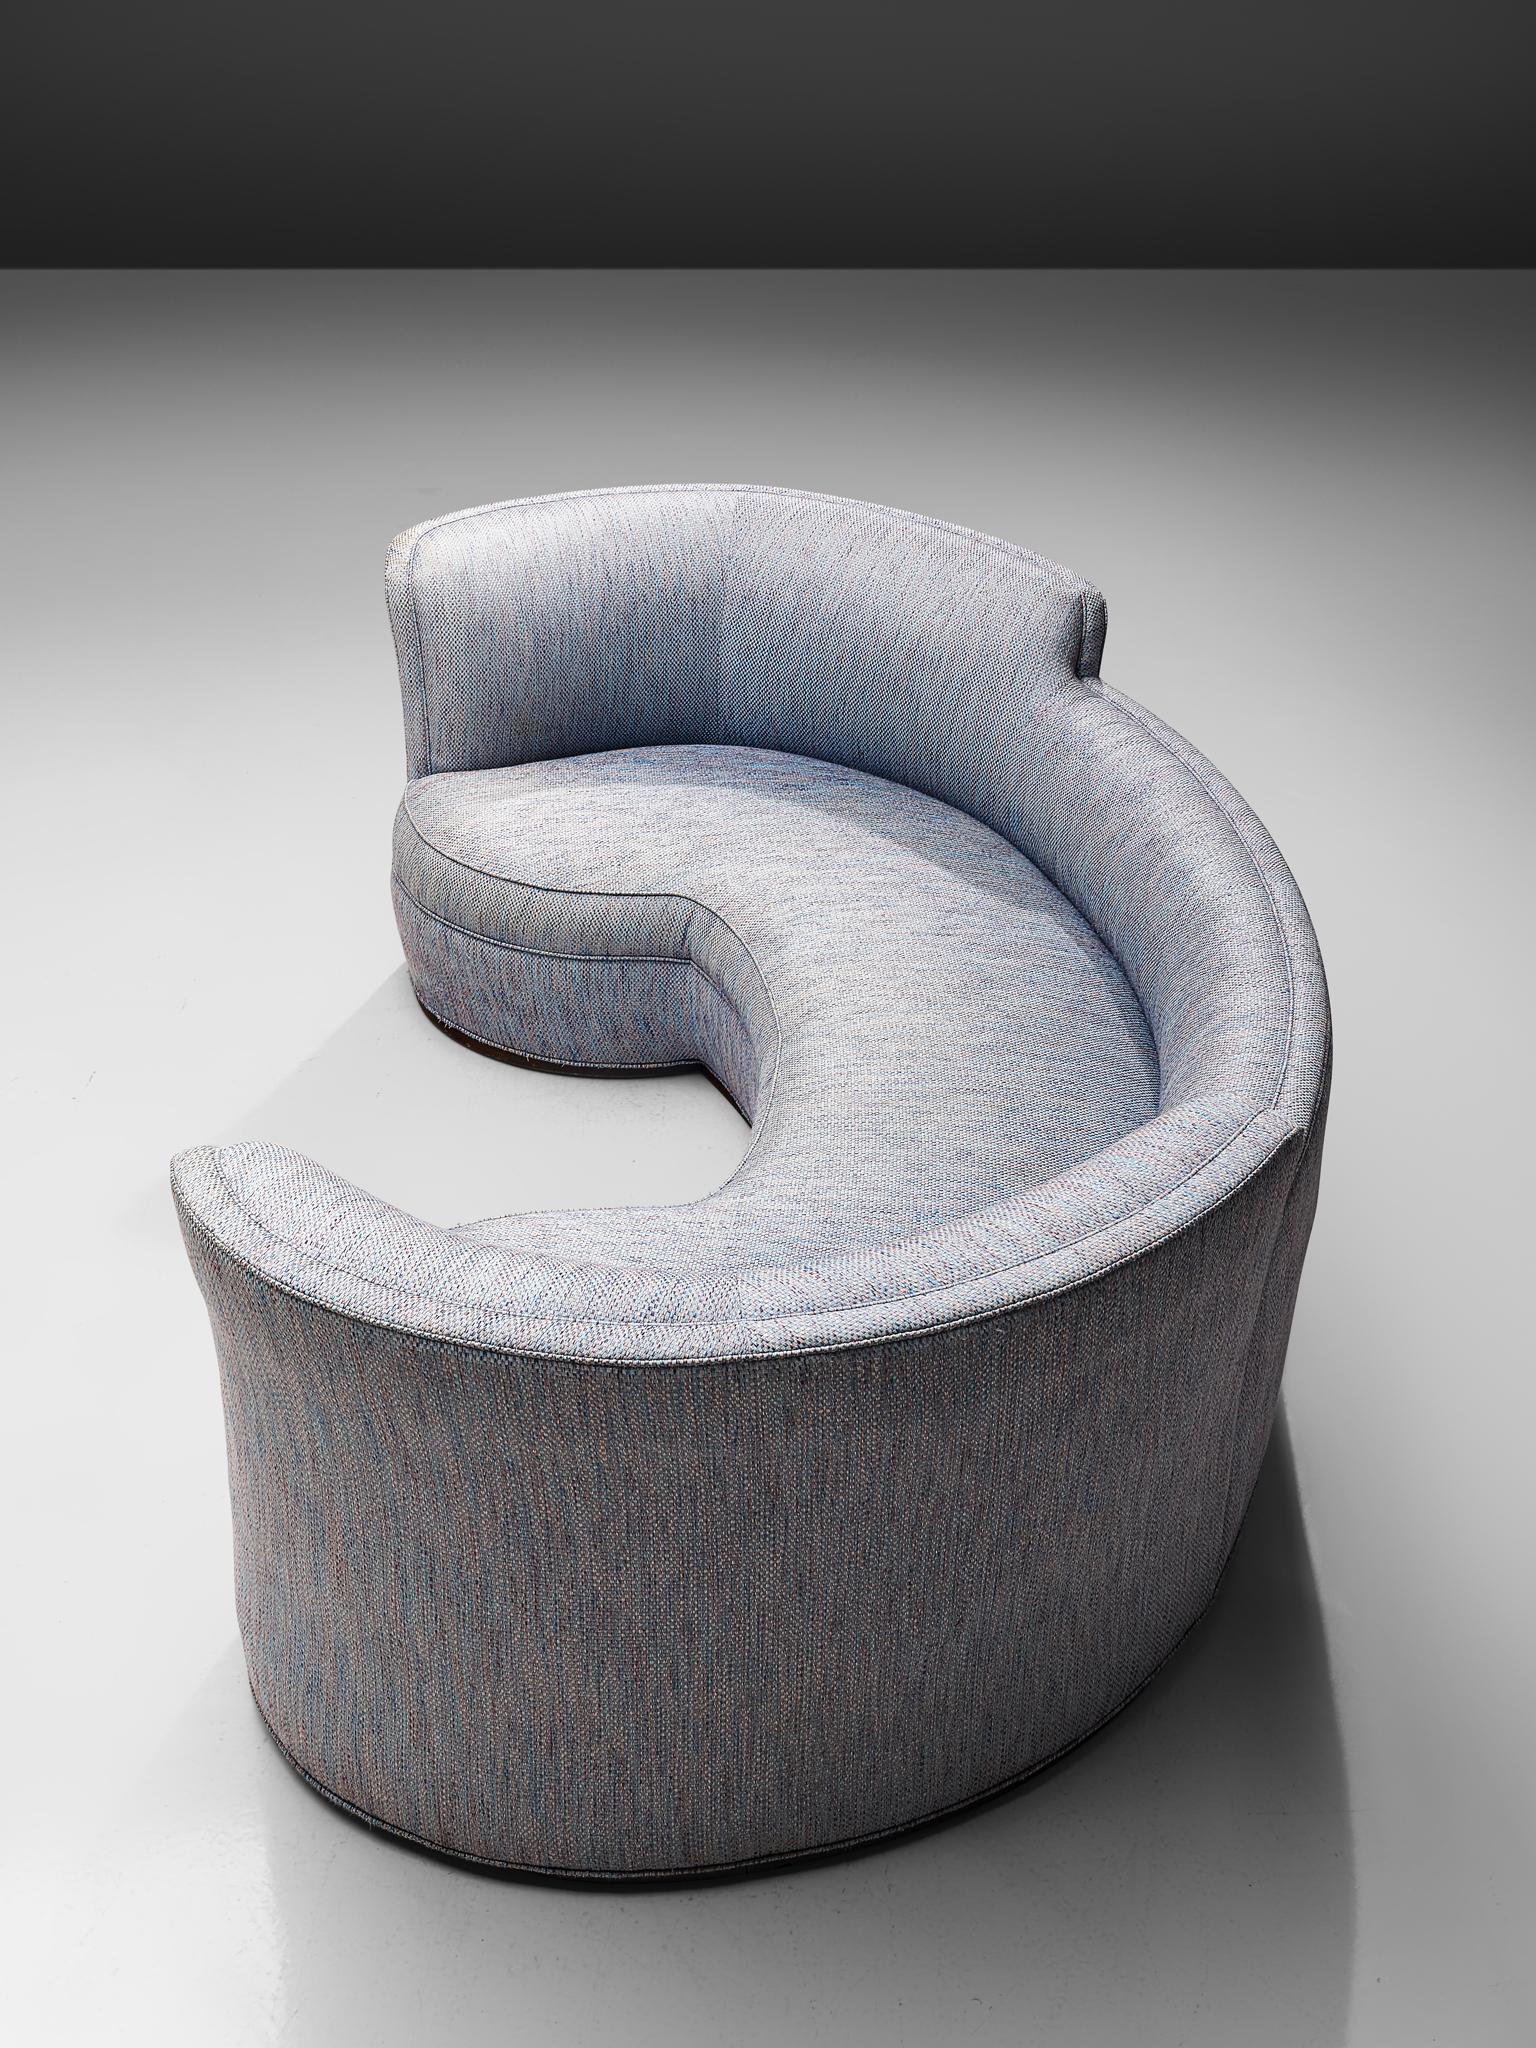 Fabric Edward Wormley 'Oasis' Sofa Model 5200